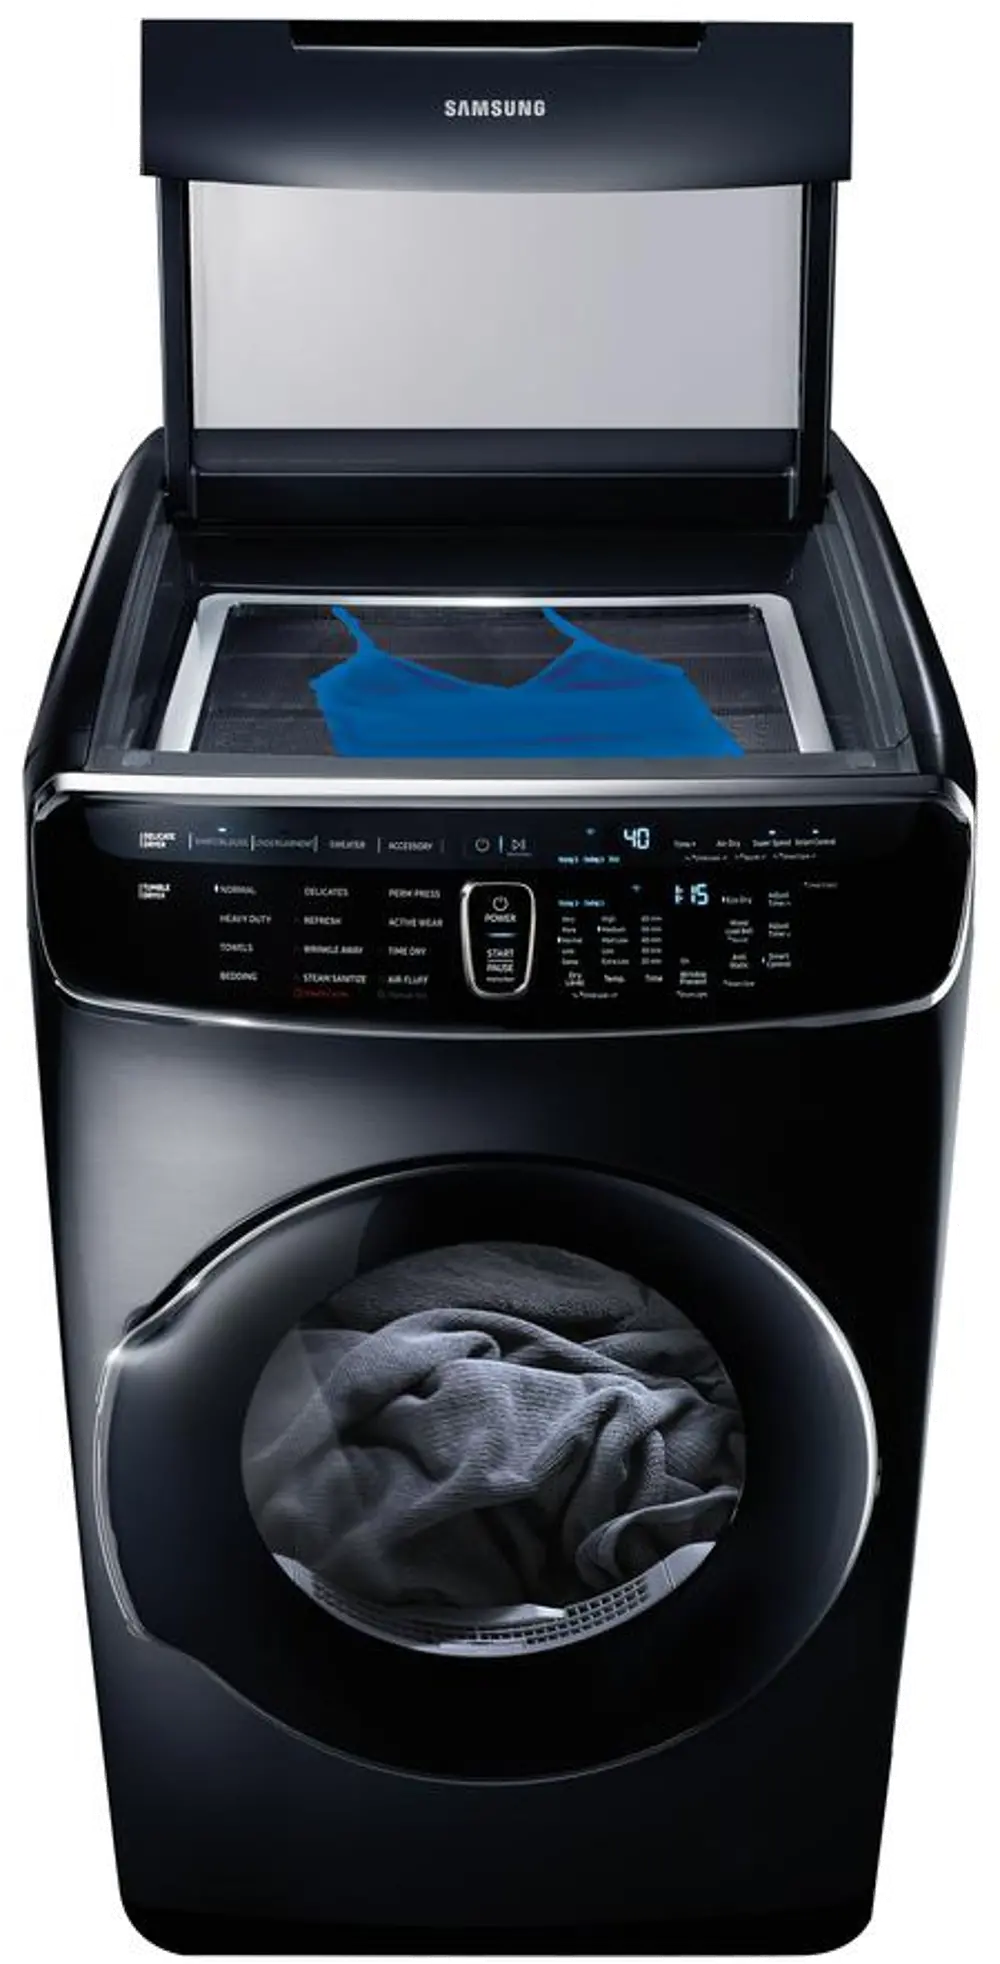 DVG60M9900V Samsung Gas FlexDry Dryer with Steam - 7.5 Total cu. ft. Black Stainless Steel-1